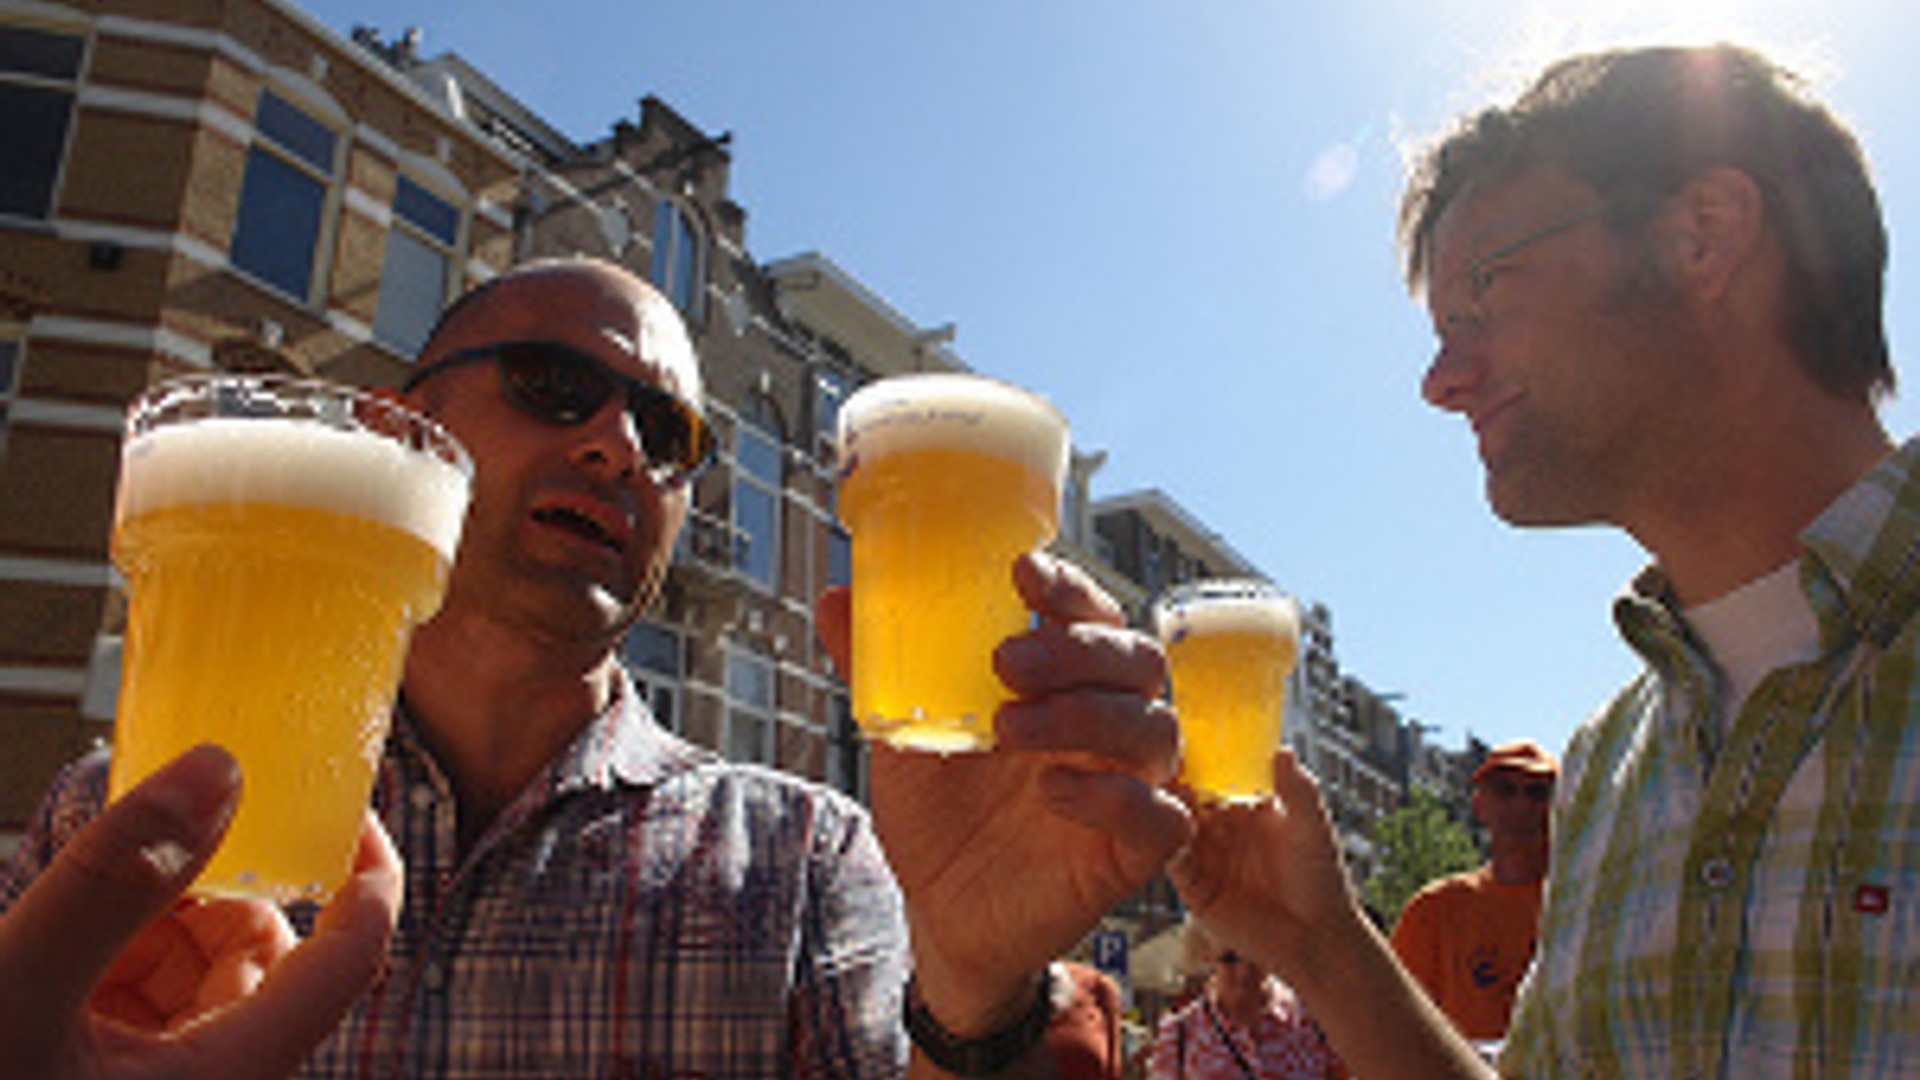 staand-bier-drinken-amsterdam-300px.jpg